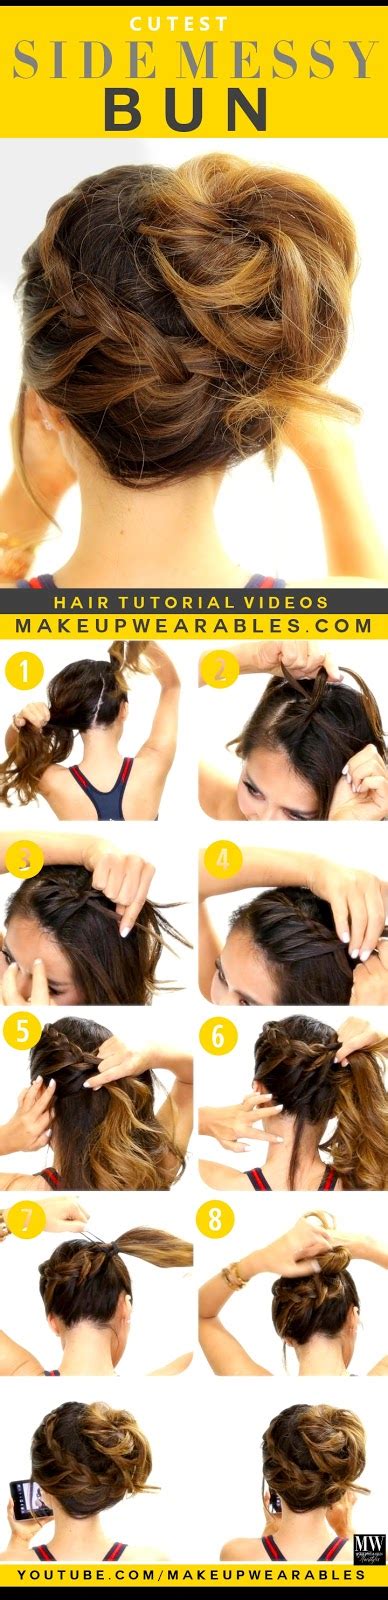 Five Easy Five Minute Hair Tutorials Trends4everyone